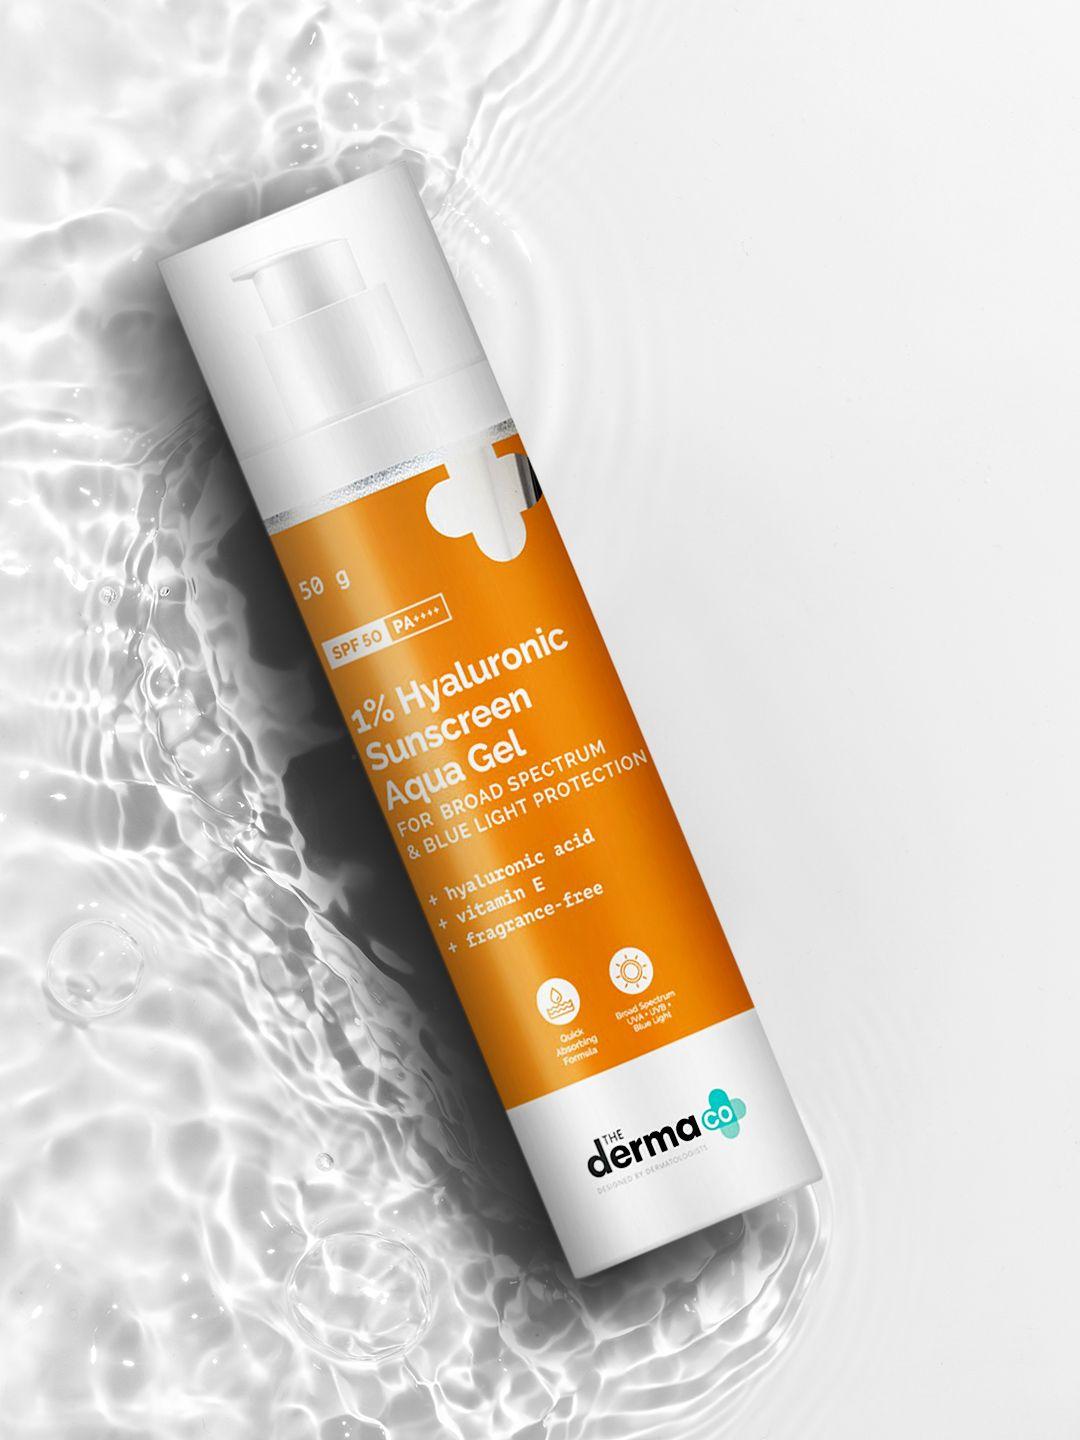 The Derma co. 1% Hyaluronic Sunscreen Aqua Gel with Titanium Oxide